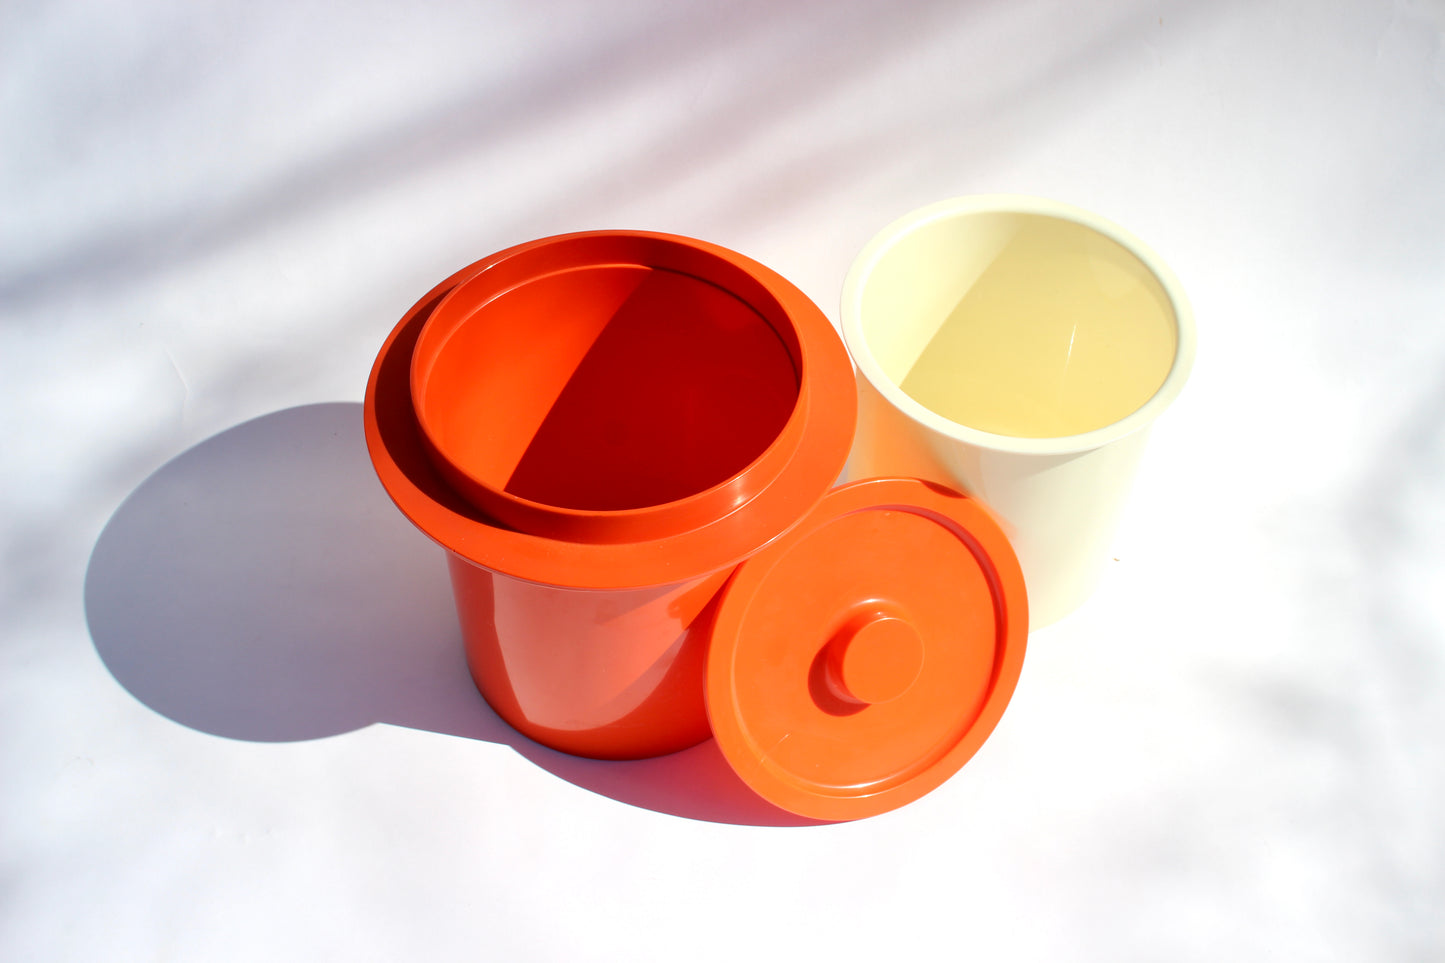 bright orange 3-piece ice bucket